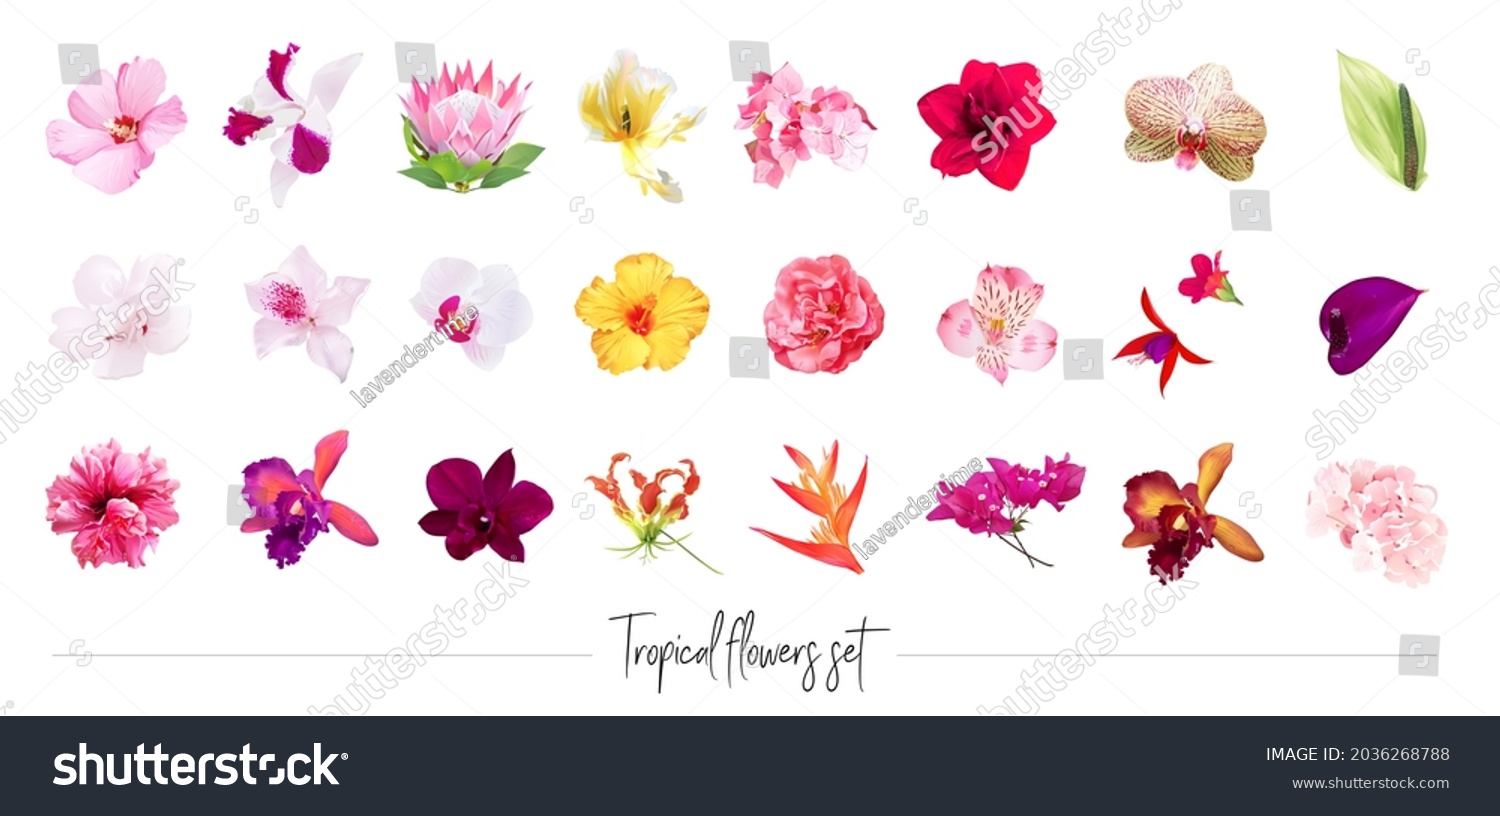 SVG of Exotic tropical flowers big vector clipart set. Orchid, strelitzia, hibiscus, bougainvillea, gloriosa, protea, tulip, hydrangea, fuchsia. Jungle floral design. Island flowers. Isolated and editable svg